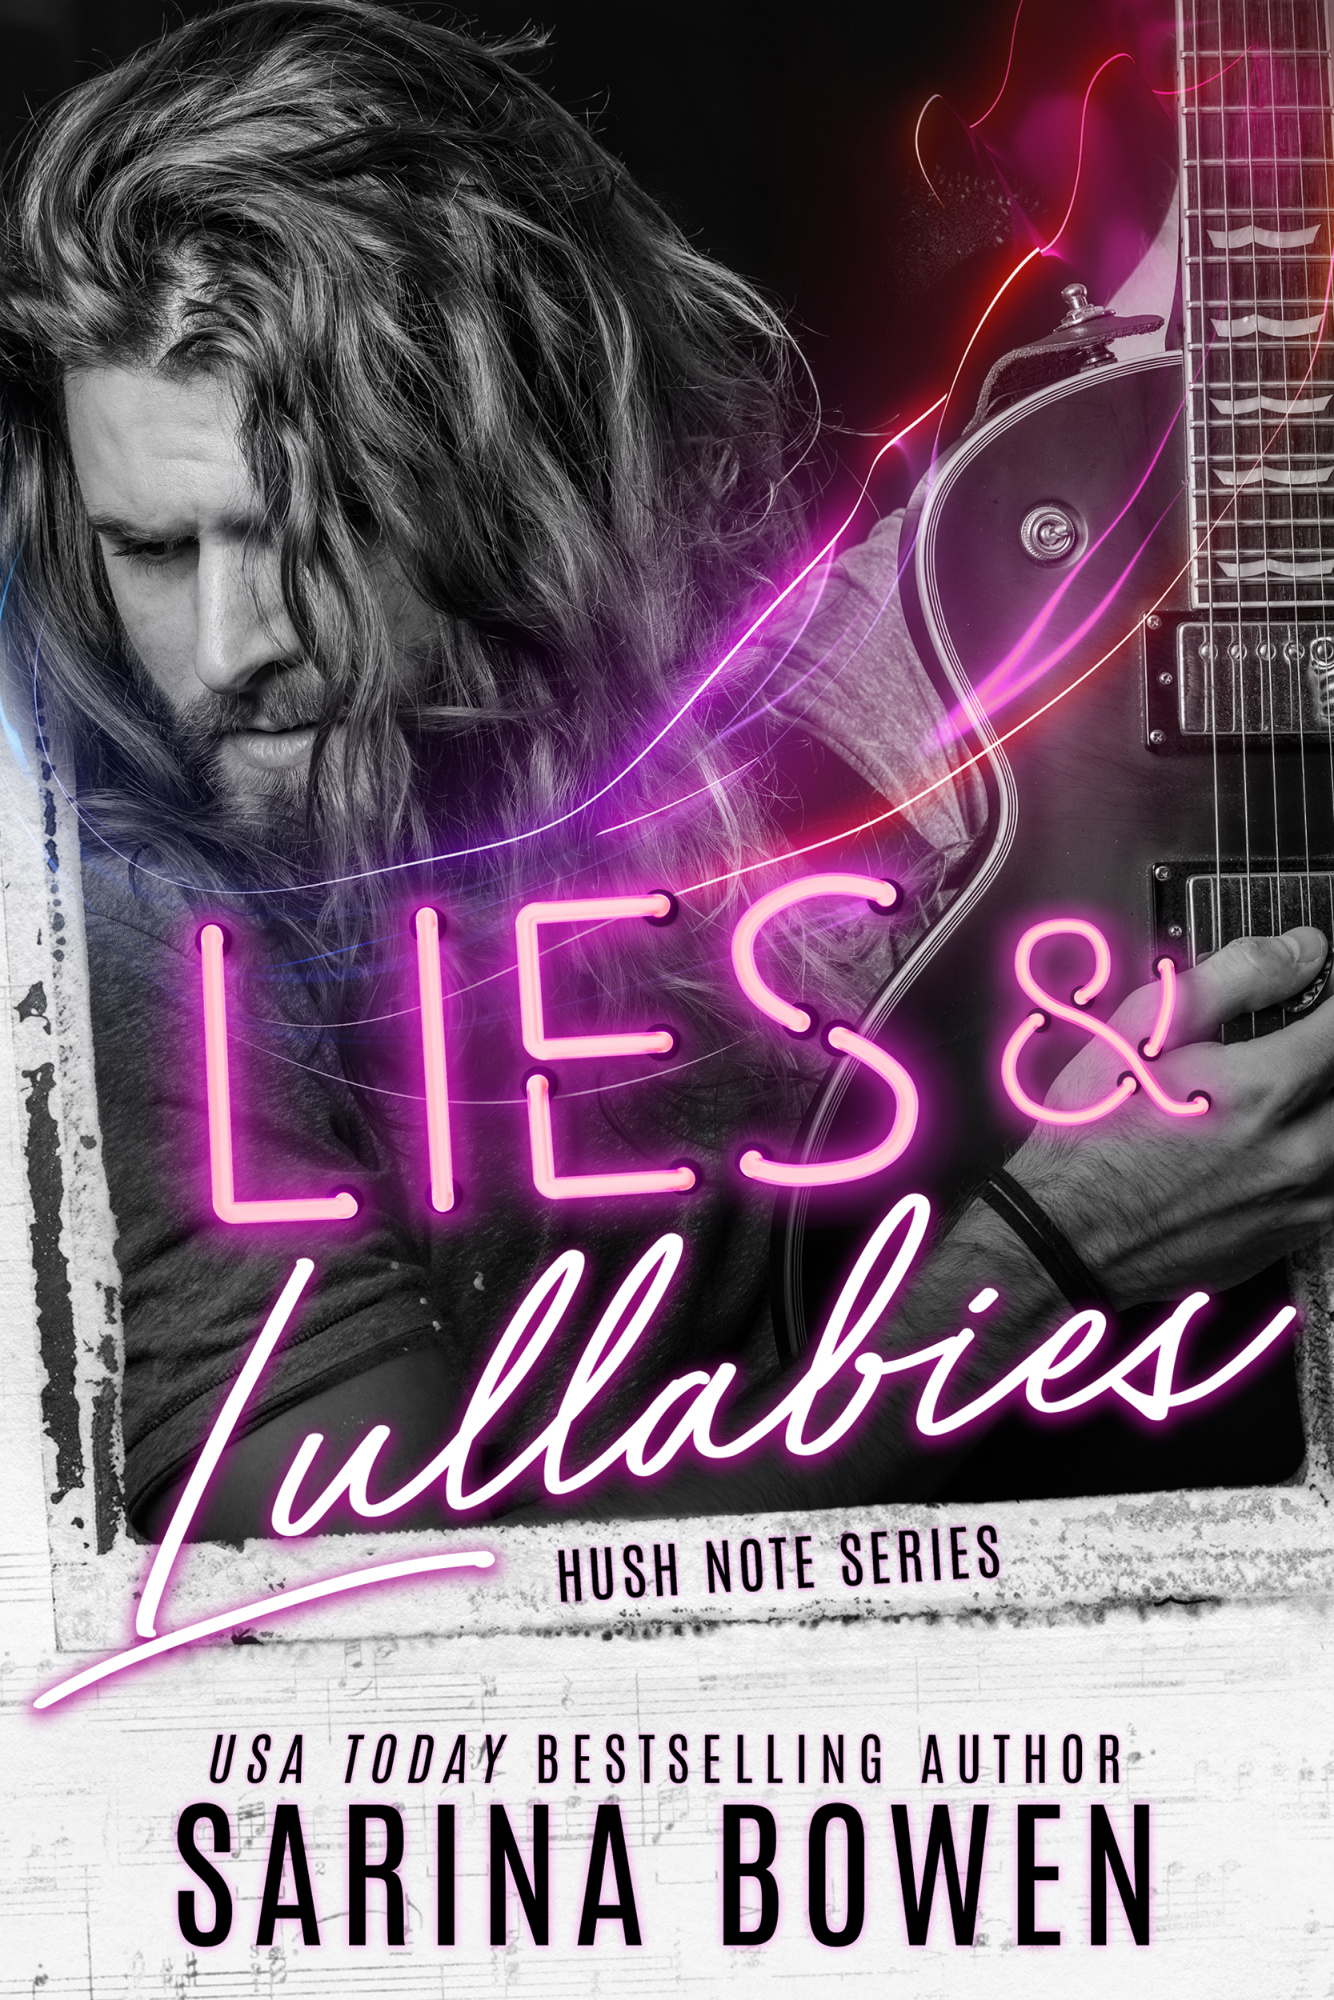 [EPUB] Hush Note #1 Lies & Lullabies by Sarina Bowen